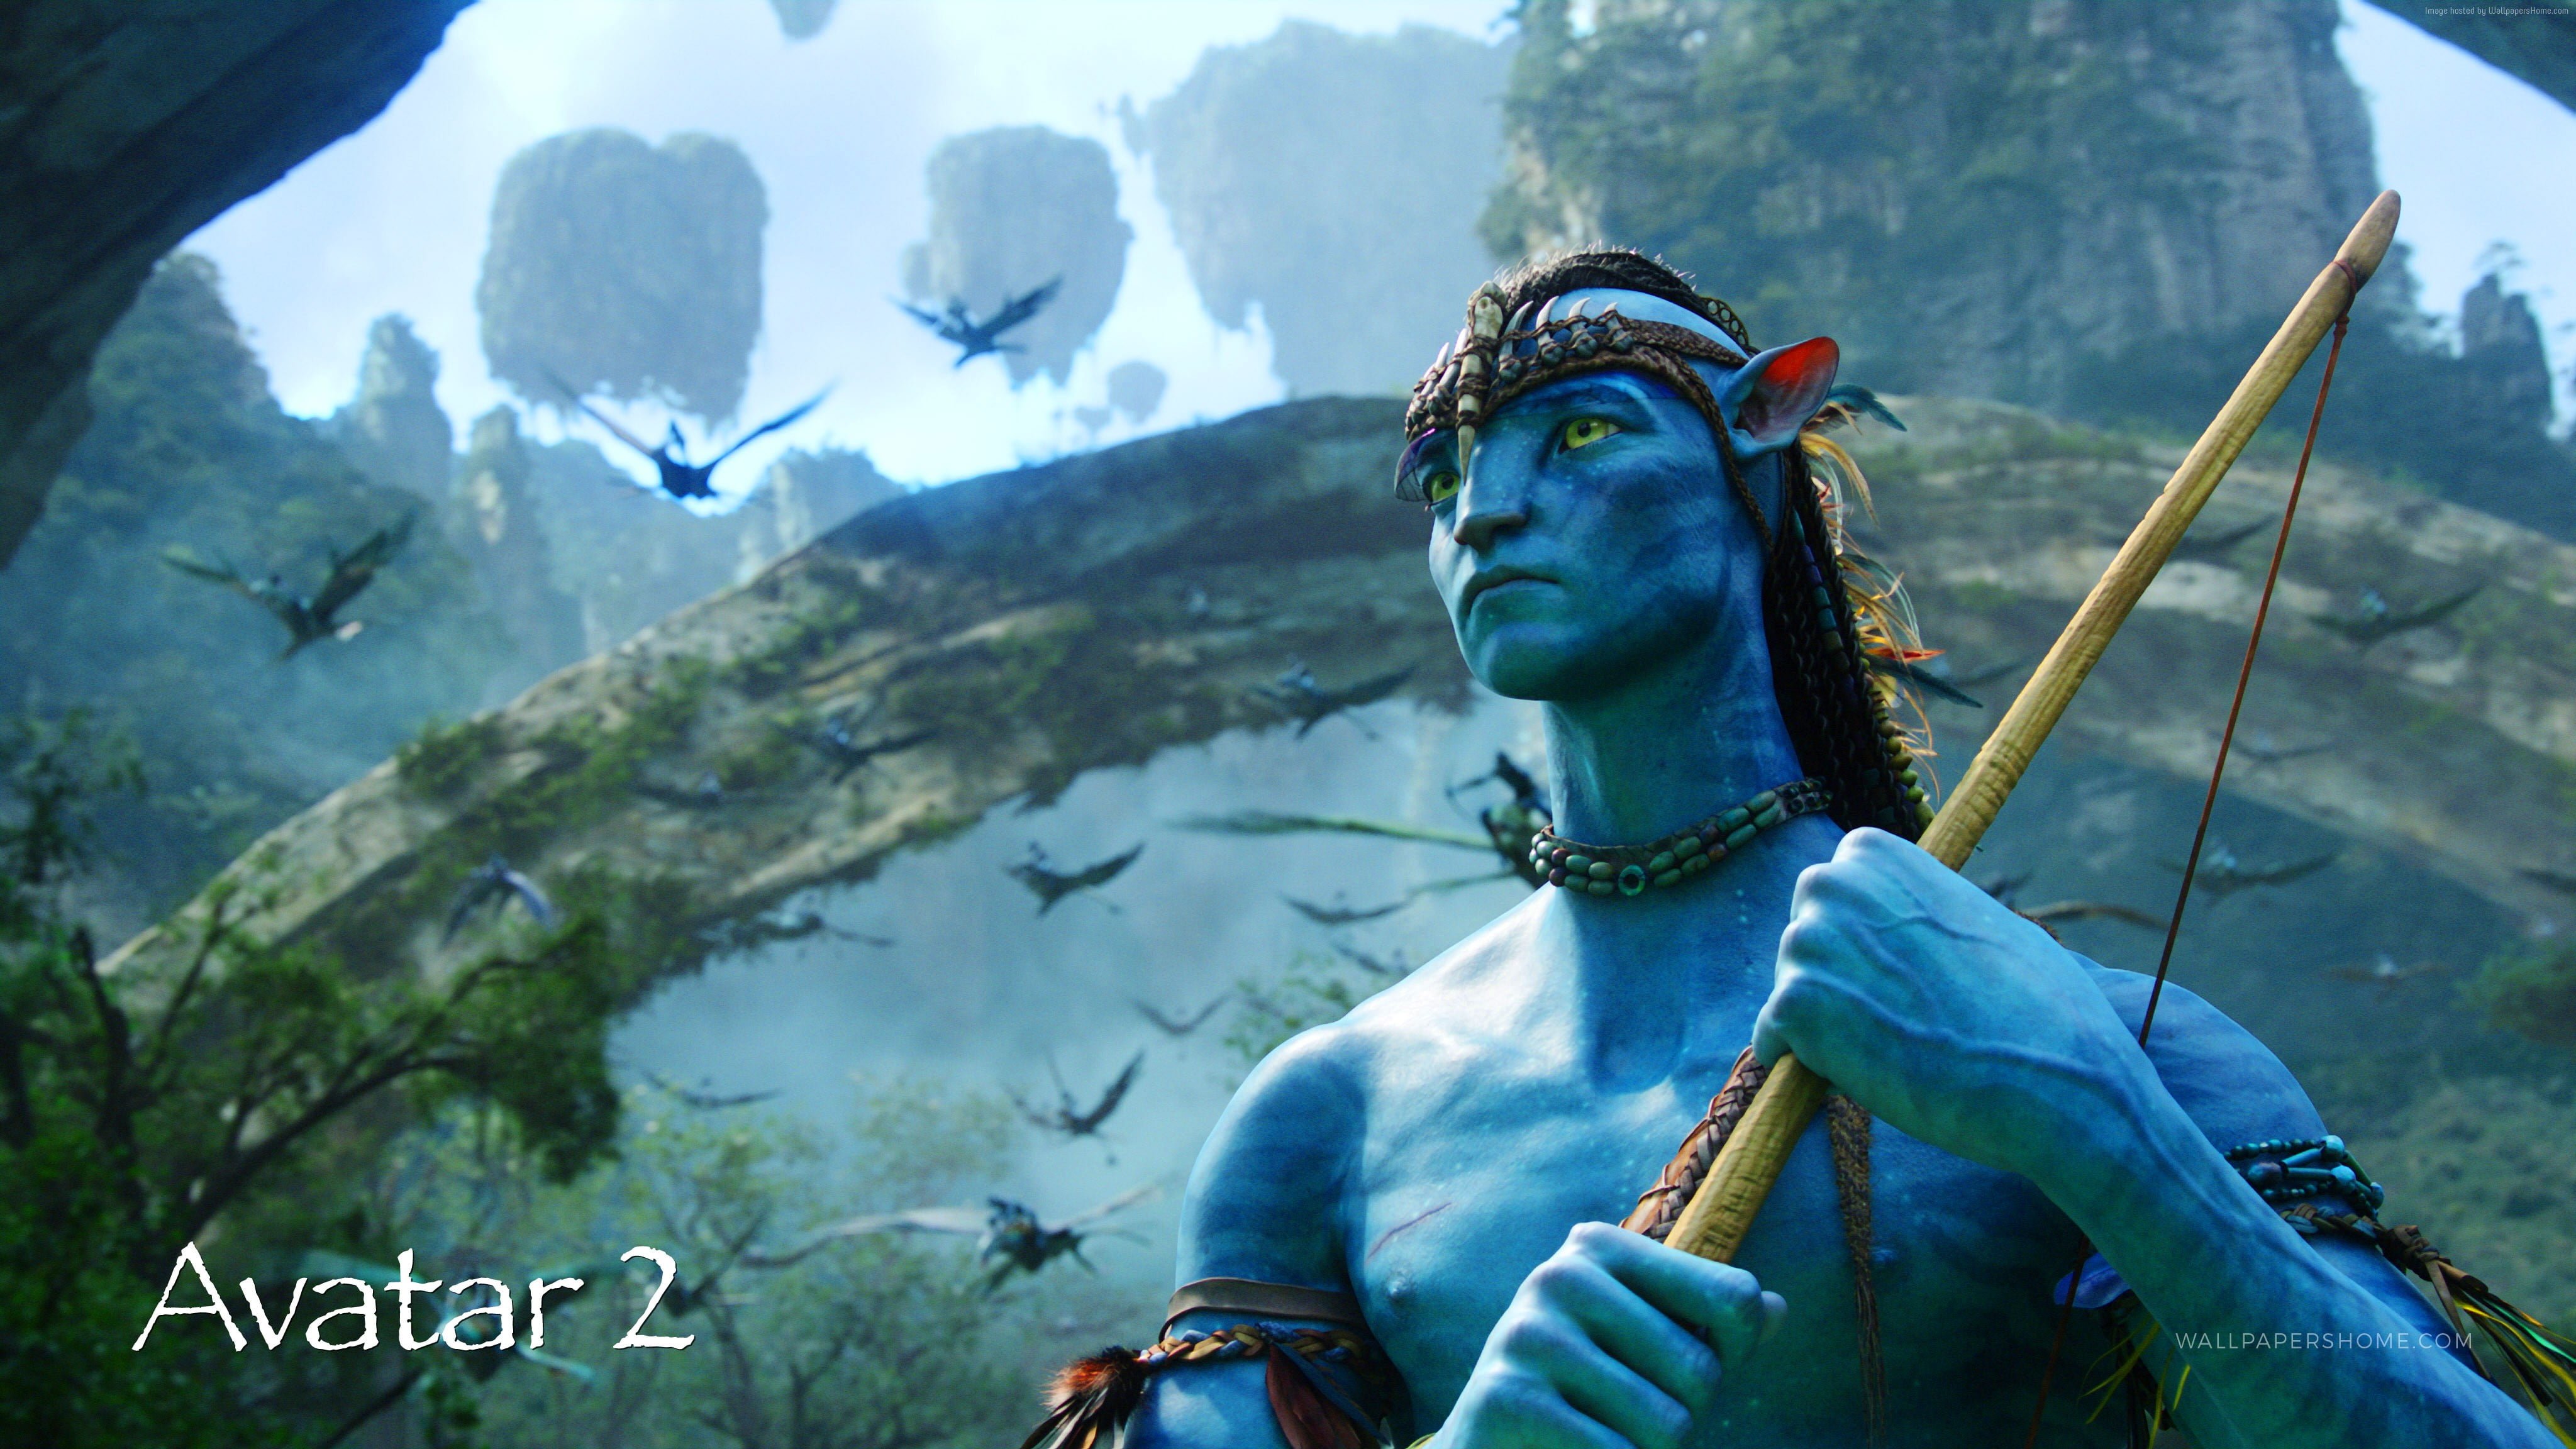 Materi Pelajaran 1: Avatar 2 Movie Poster